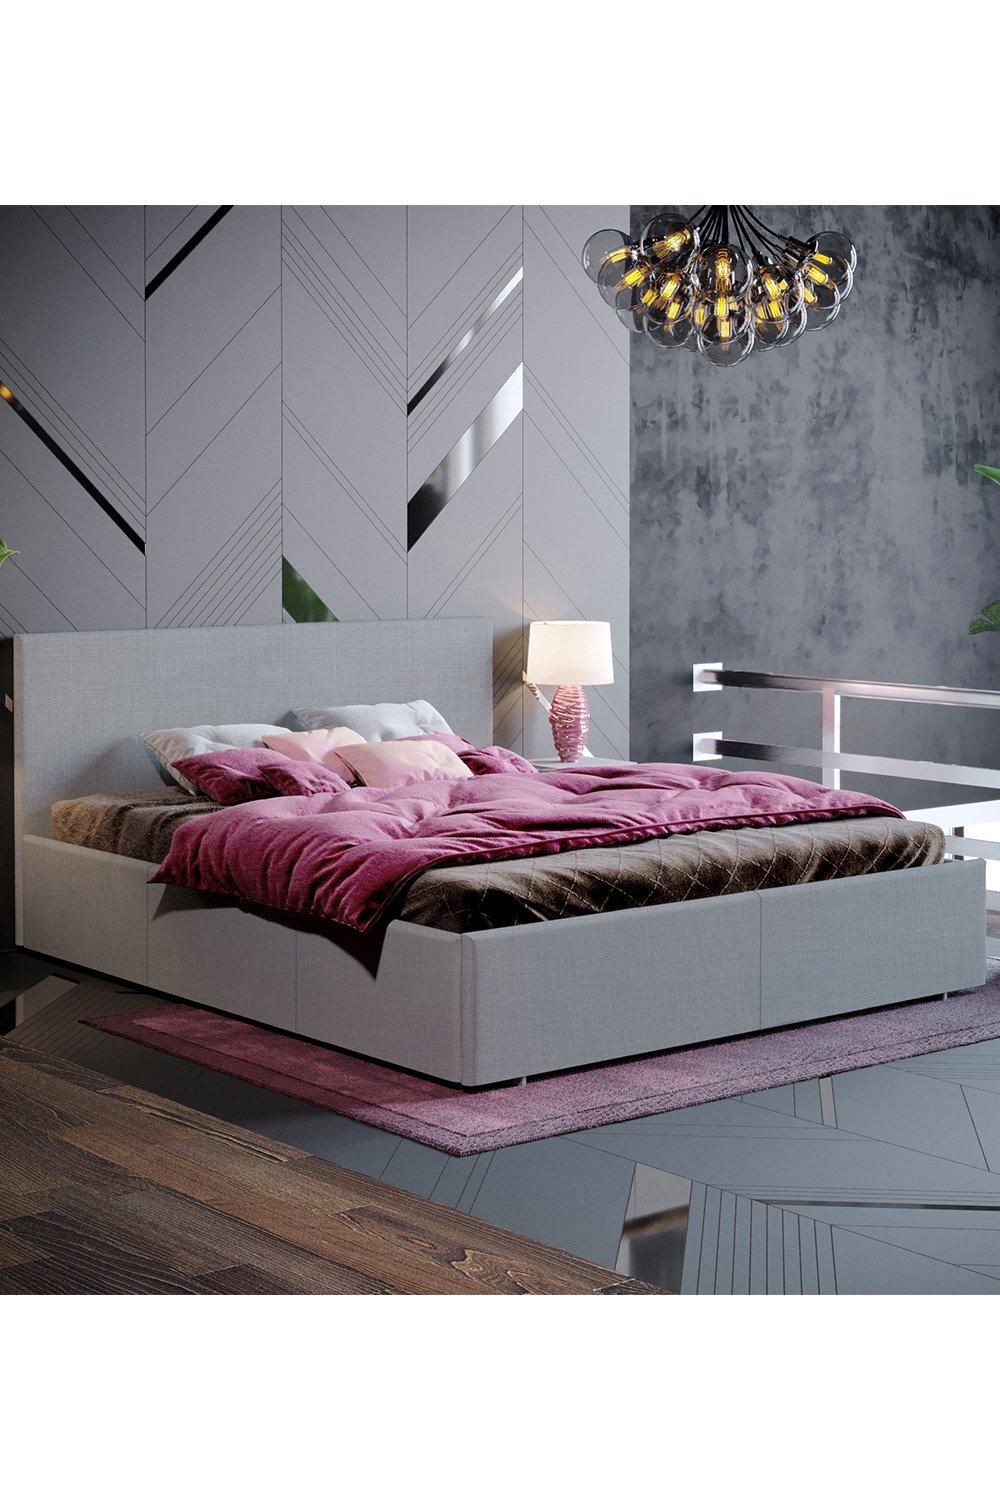 Vida Designs Veronica King Size Ottoman Bed Frame Linen Fabric 820 x 1580 x 2080 mm